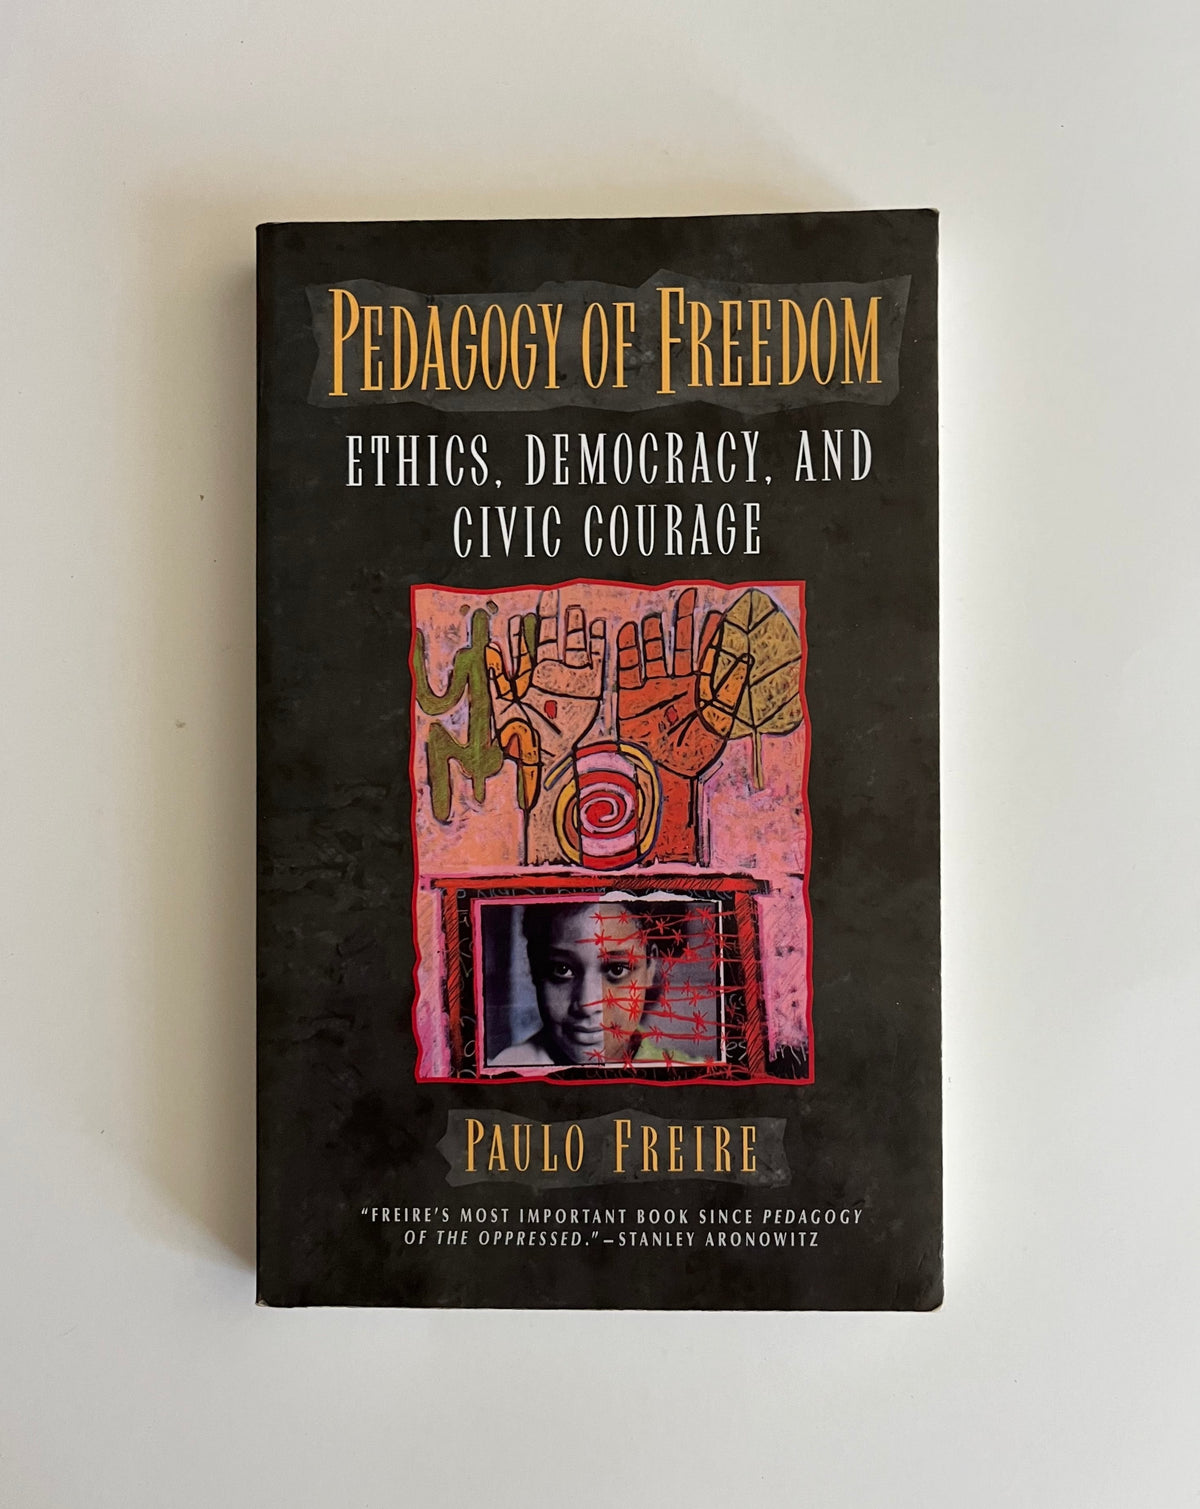 Pedagogy of Freedom by Paulo Freire